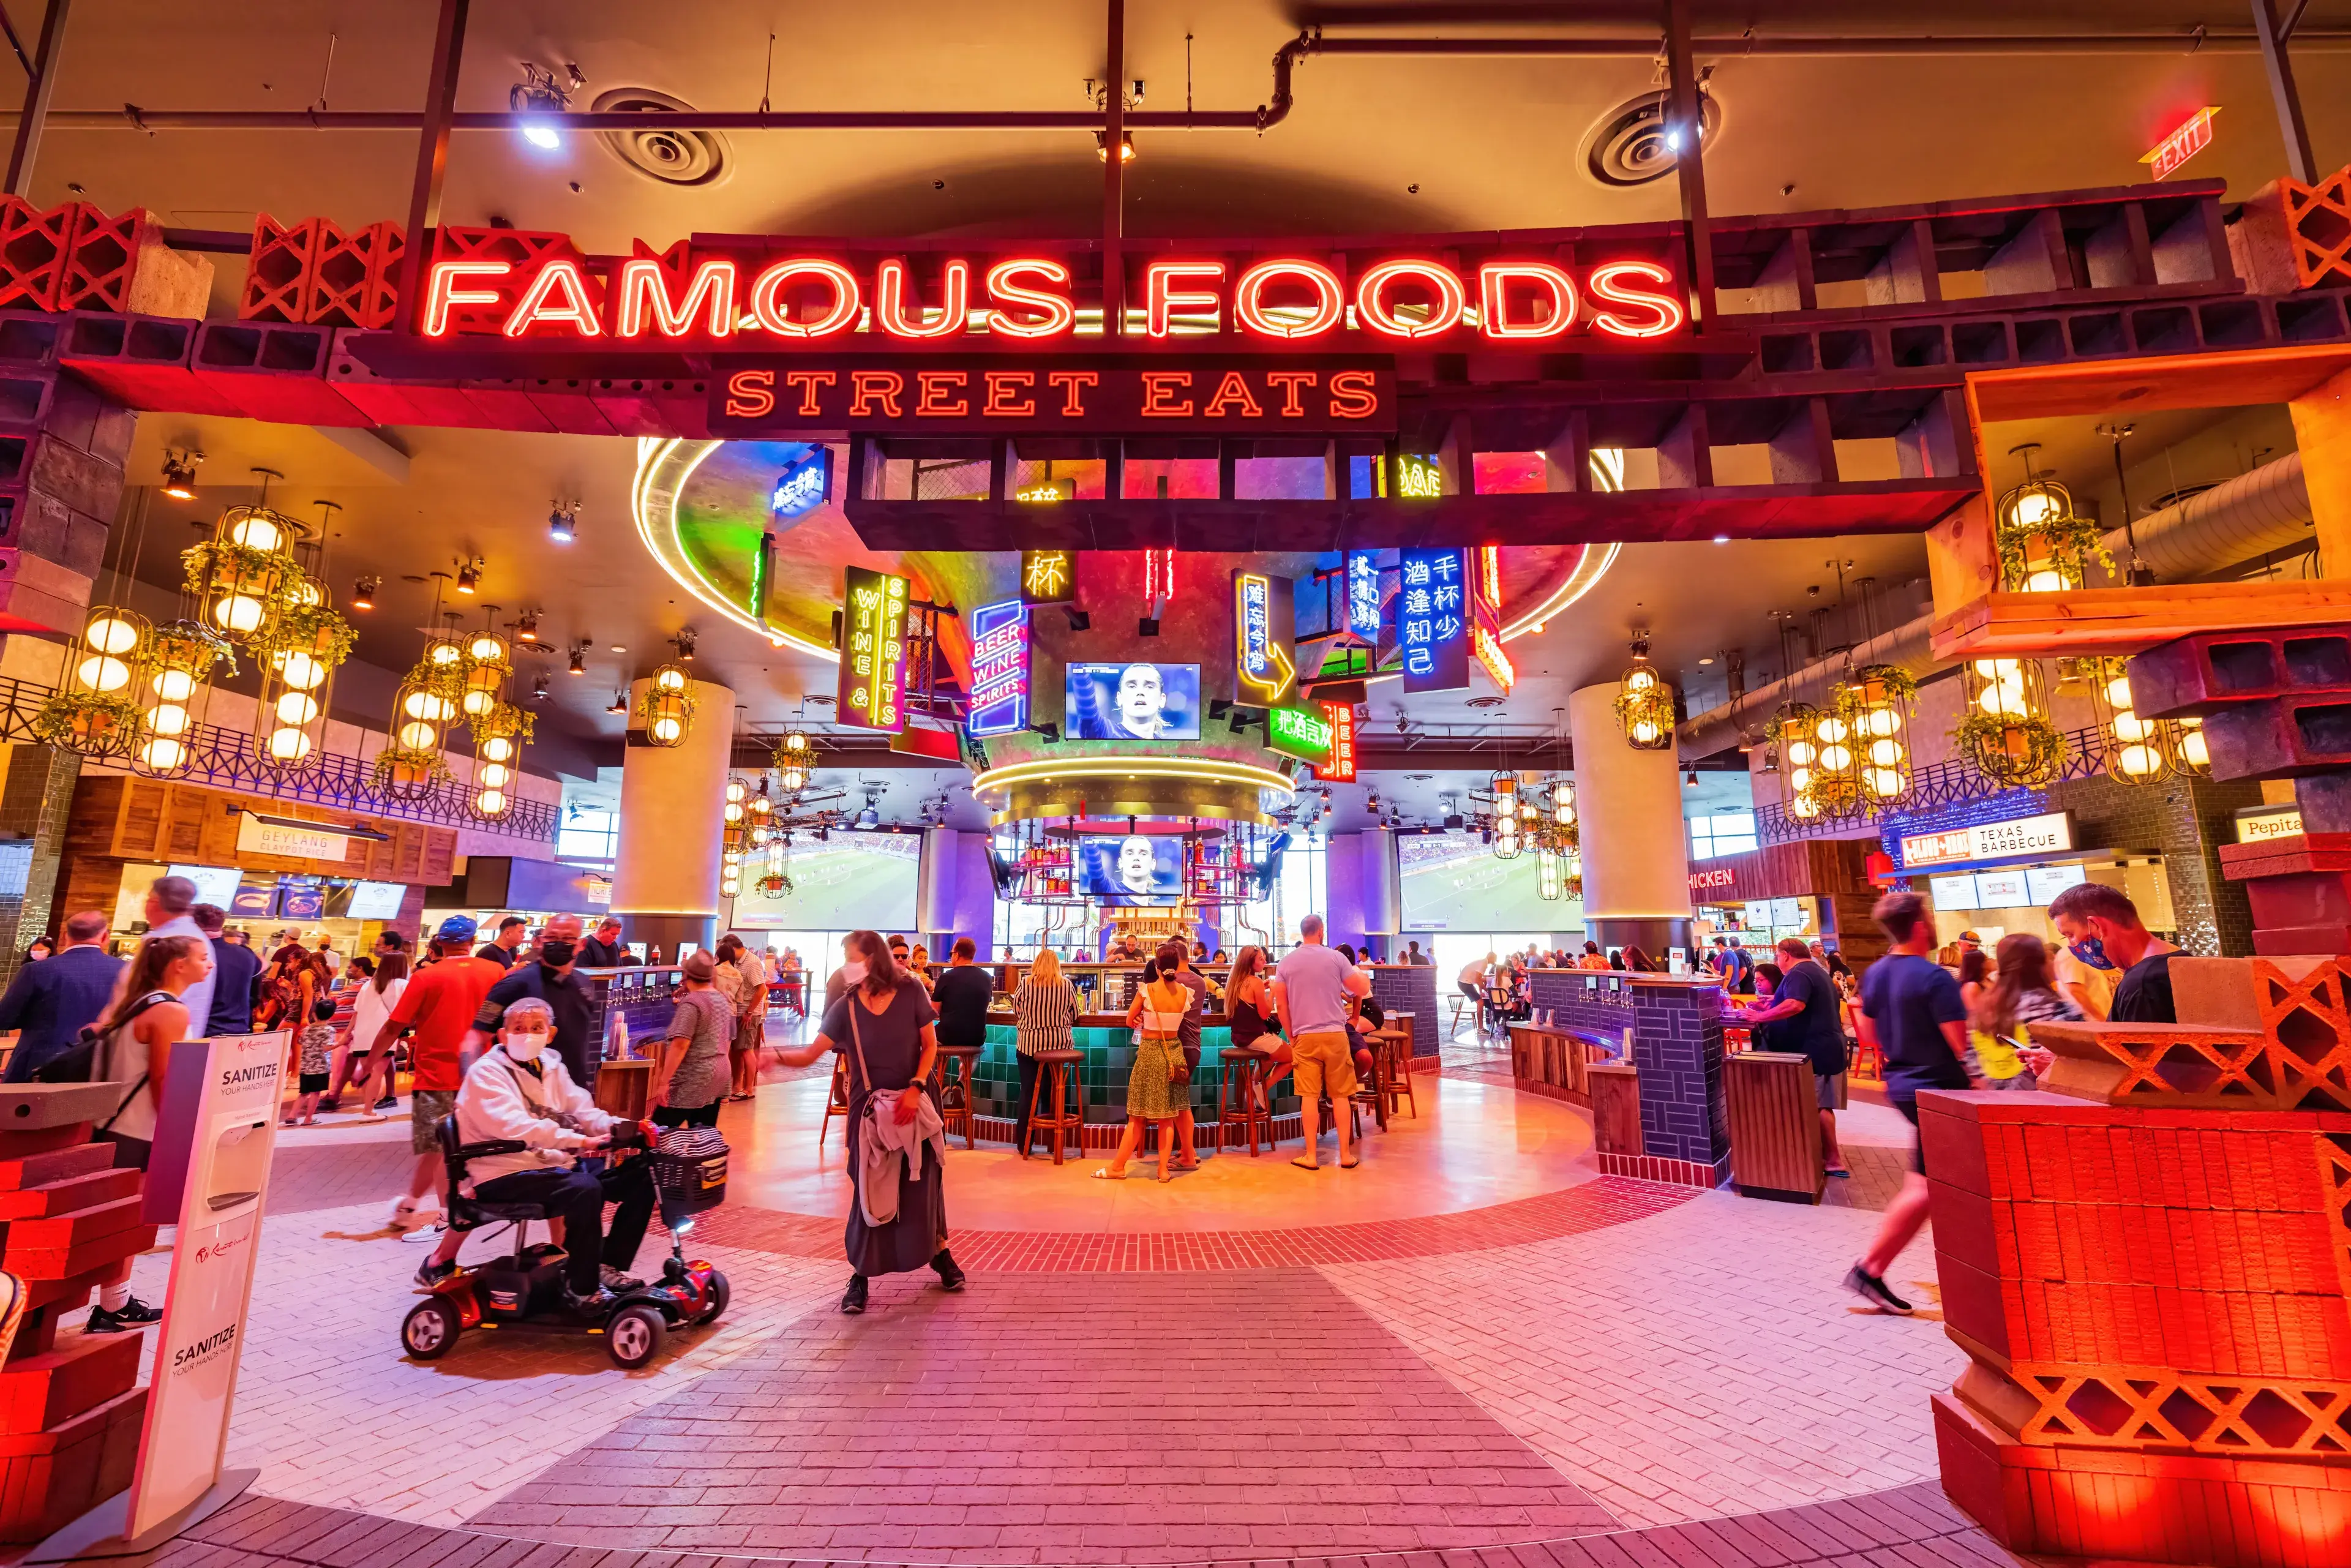 Las Vegas, JUN 28, 2021 - Famous Food Street Eats of the Resorts World casino